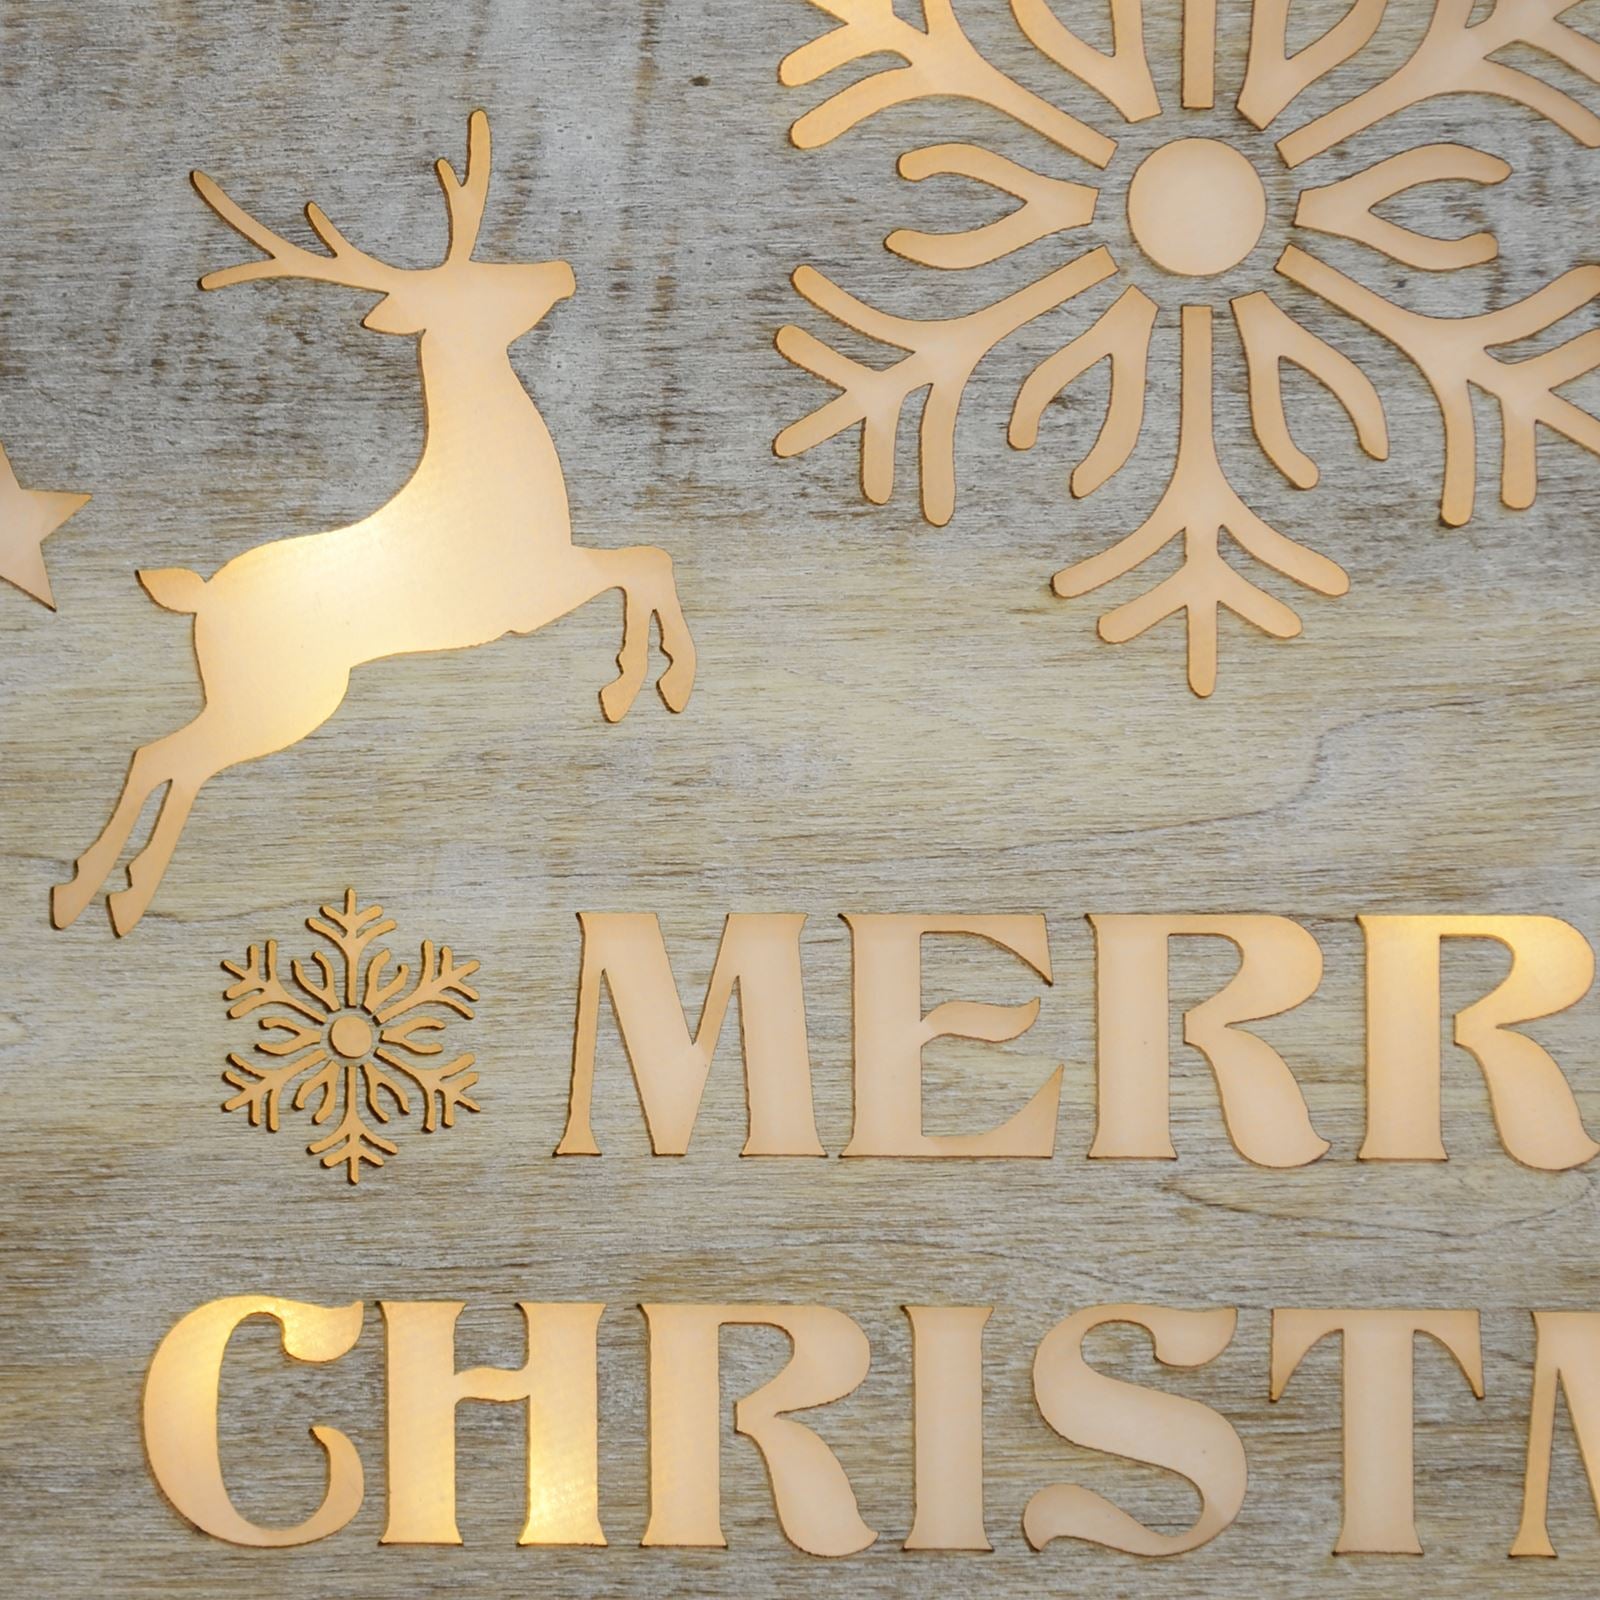 Mr Crimbo Light Up Wall Plaque Christmas Reindeer Wooden - MrCrimbo.co.uk -XS5758 - 25cm -christmas decorations